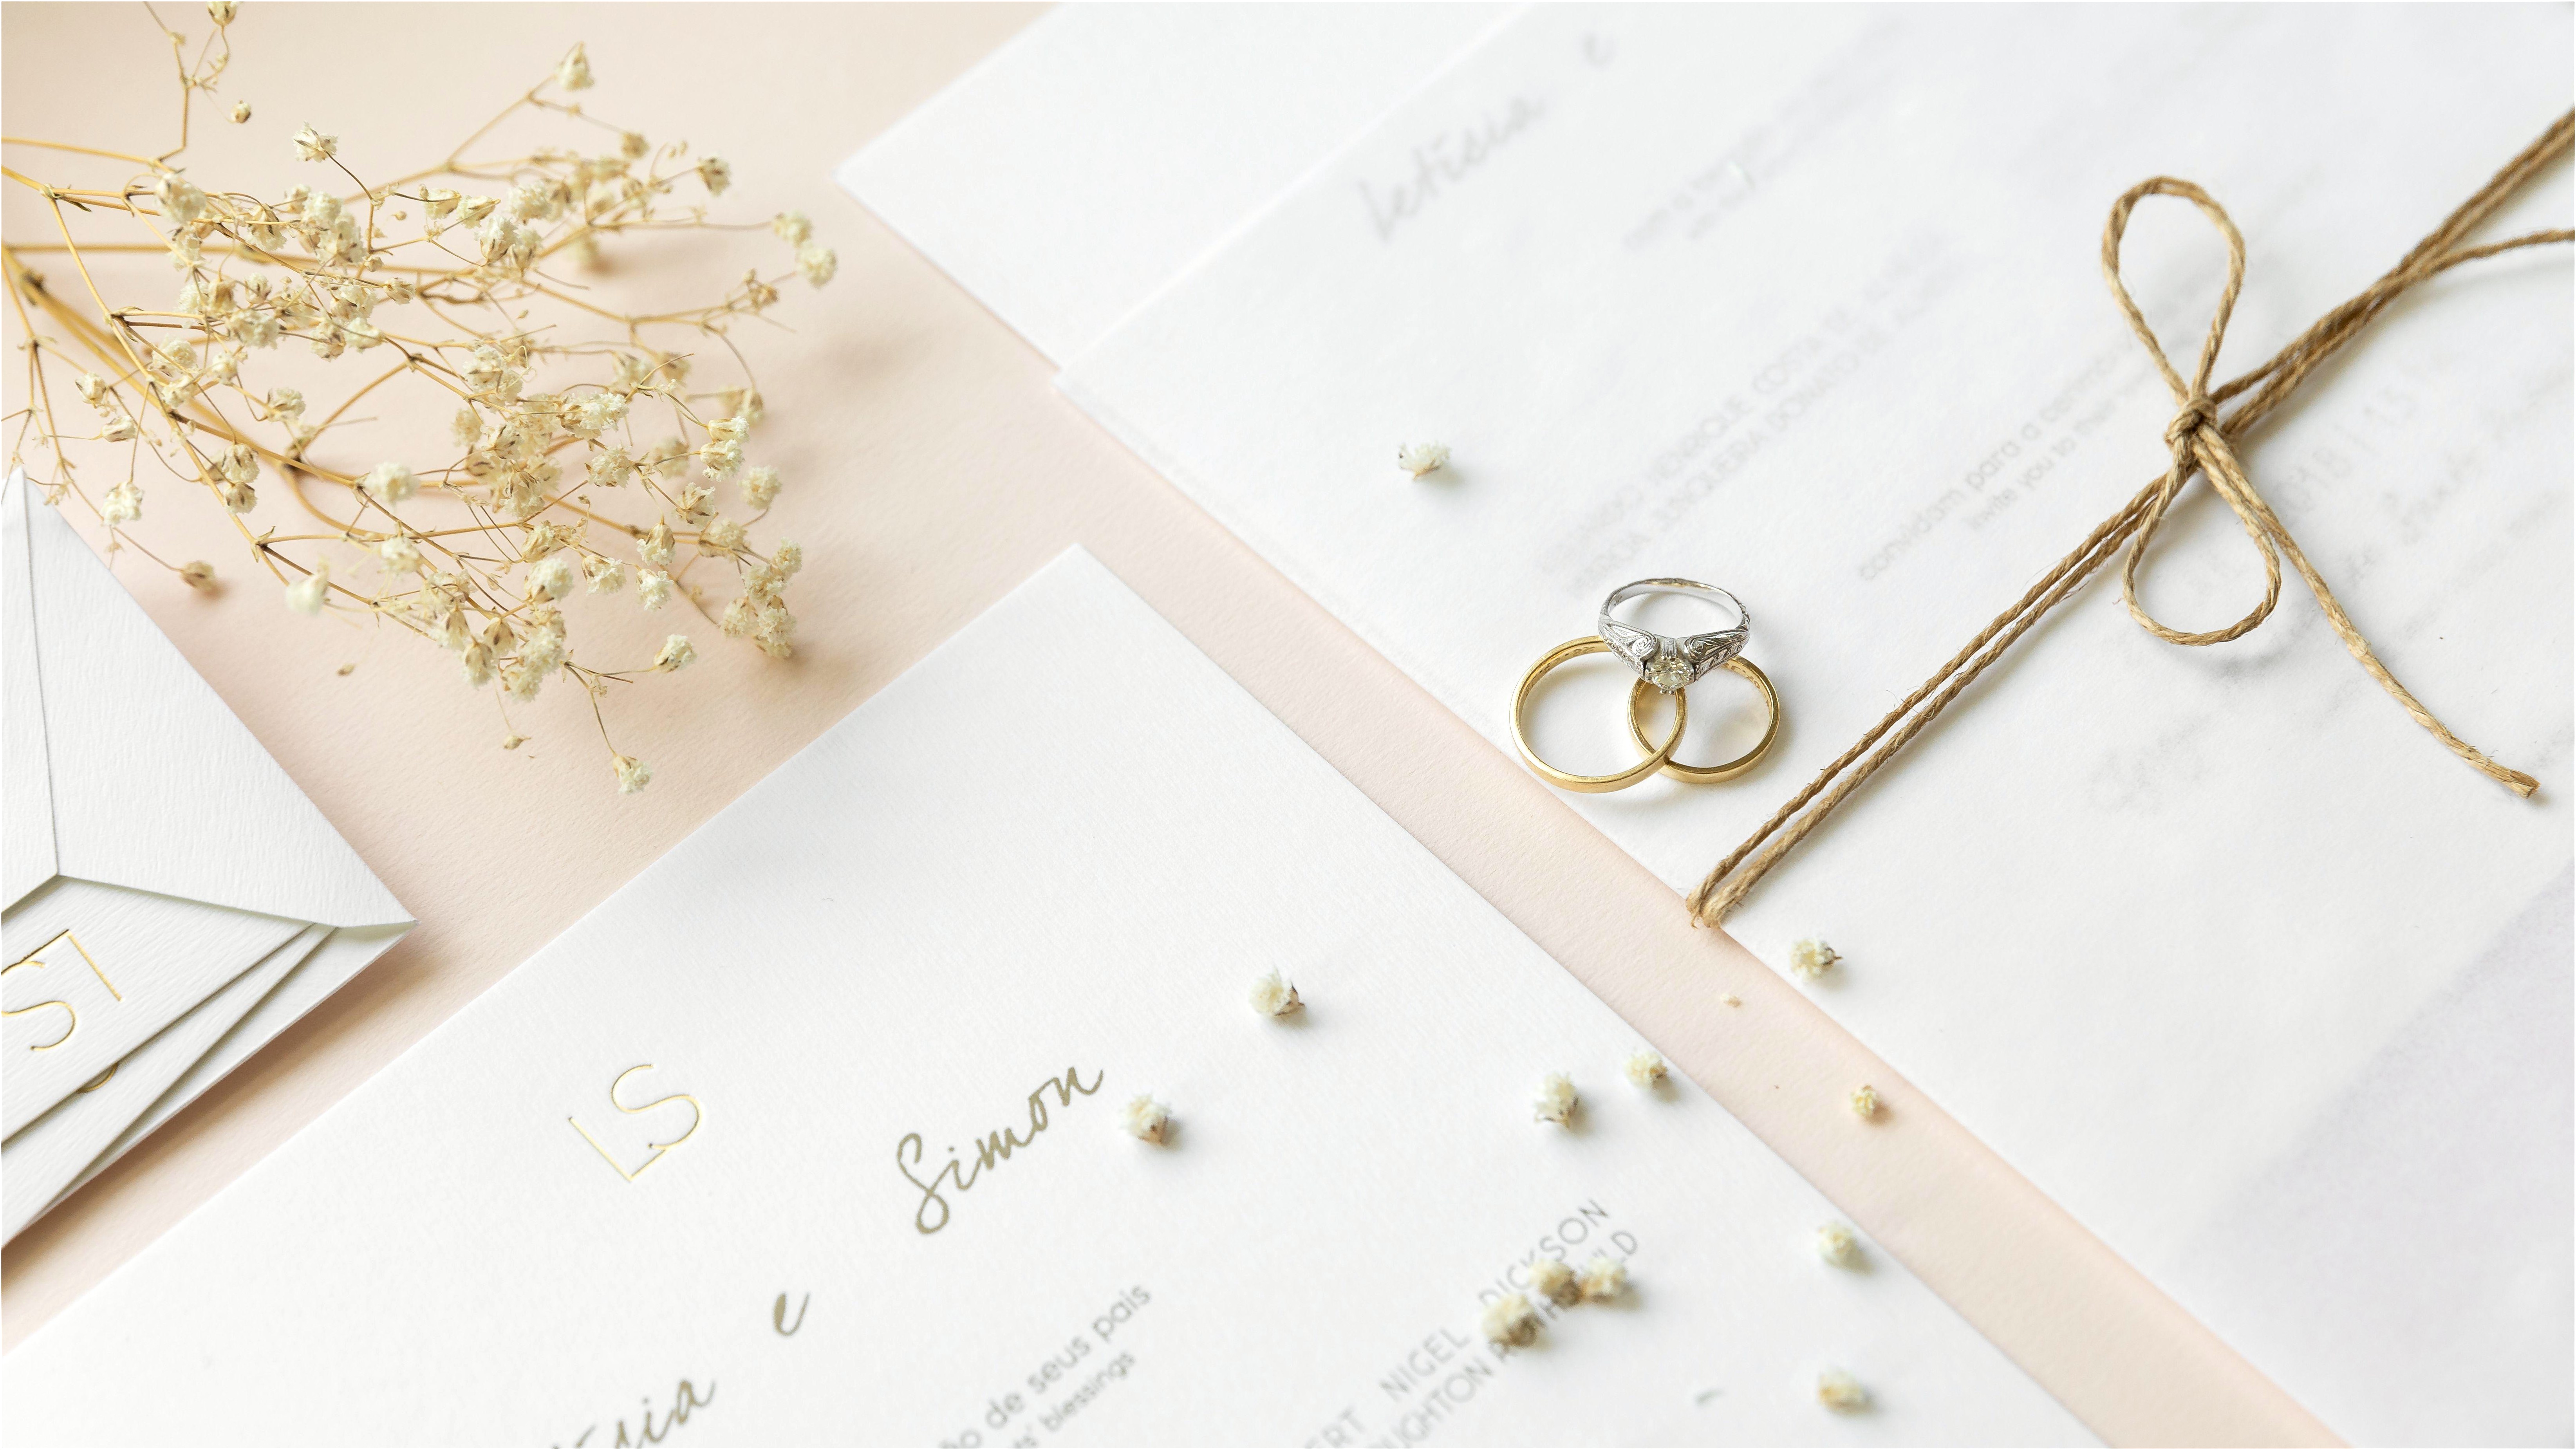 Best Font For Addressing Wedding Invitations